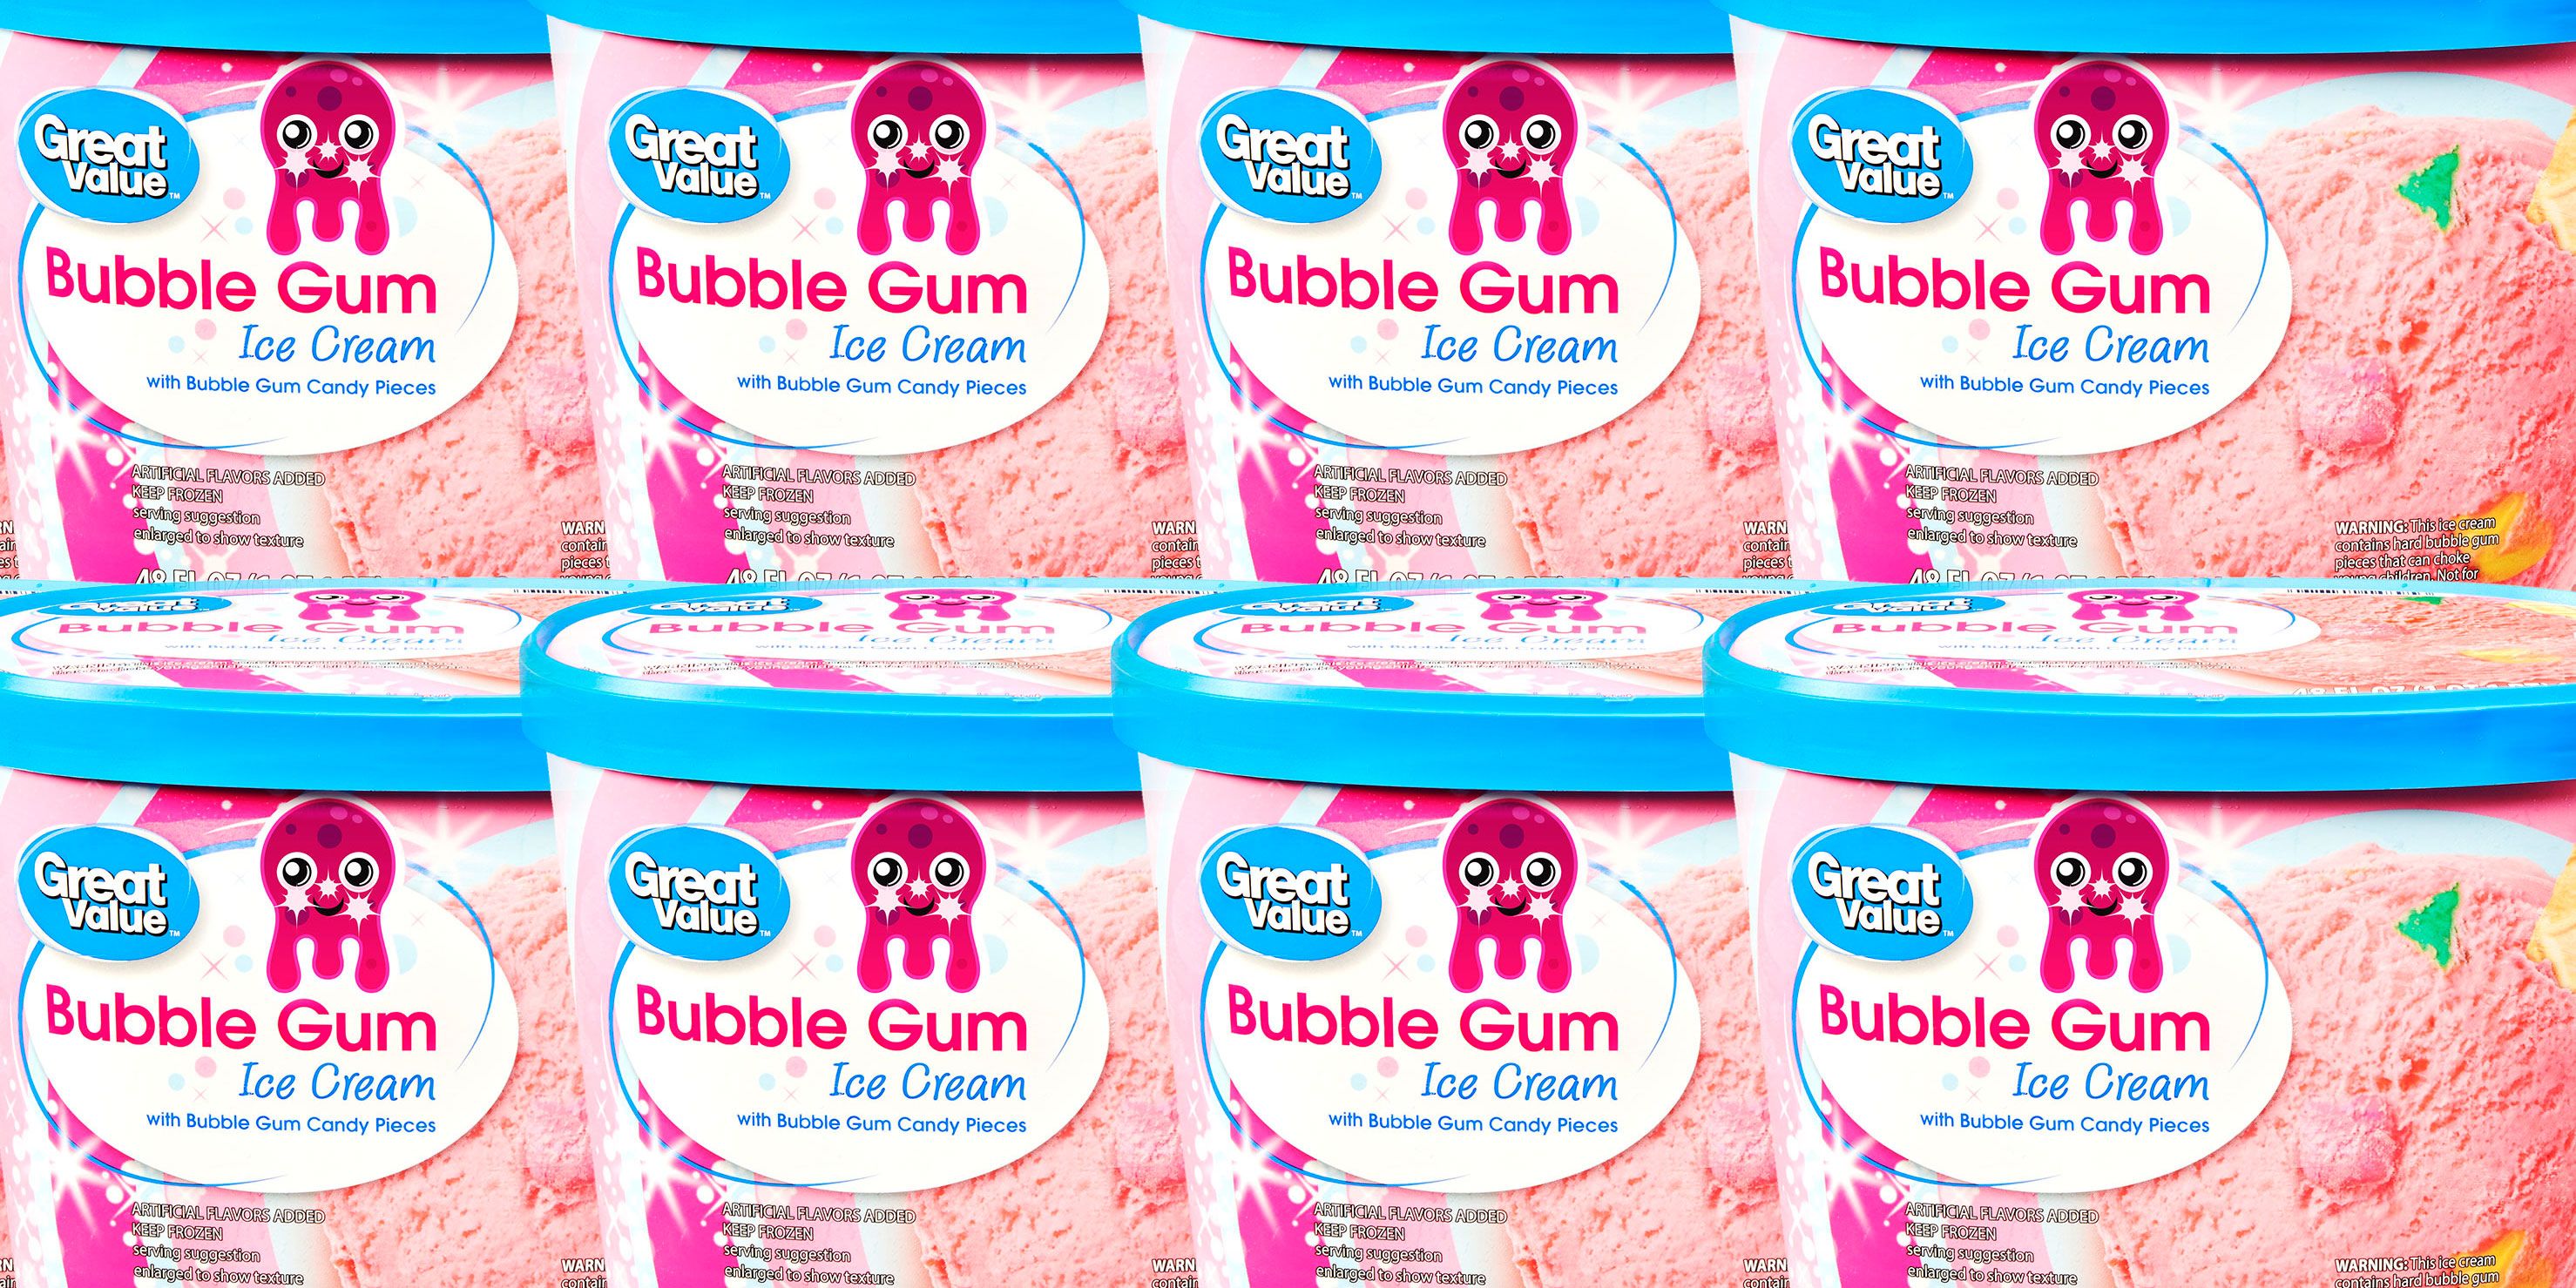 Walmart S Bubble Gum Ice Cream Has Actual Bubble Gum Pieces In It